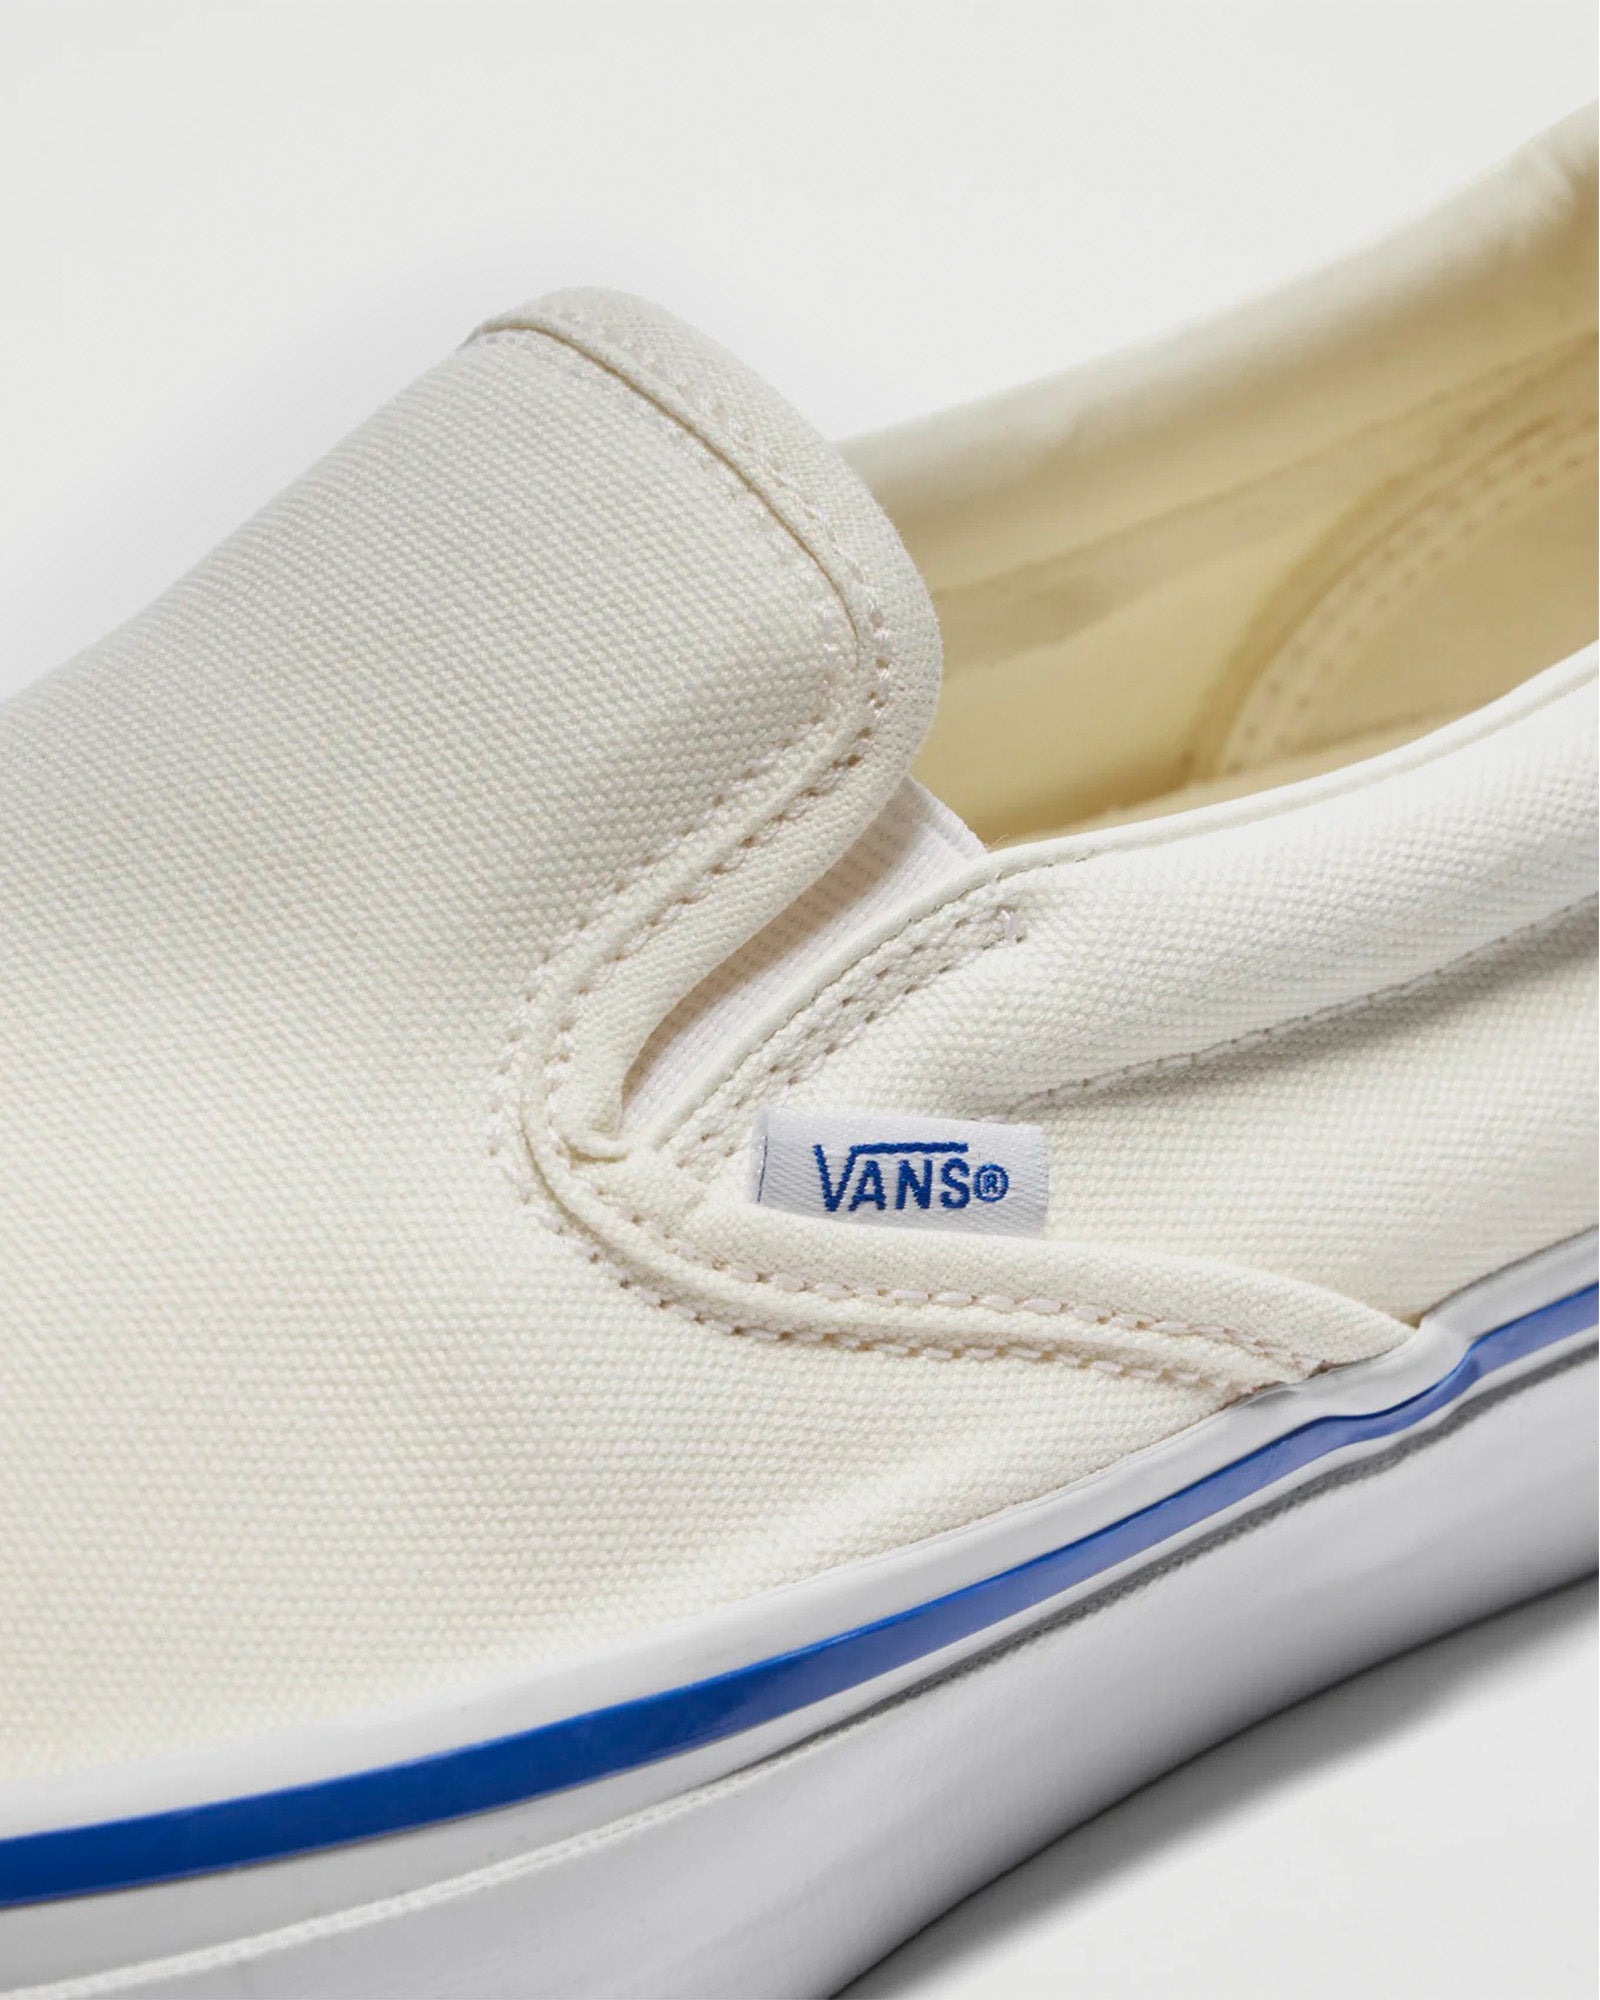 Vans Premium Slip-On Reissue 98 LX Off White Shoes Sneakers Unisex